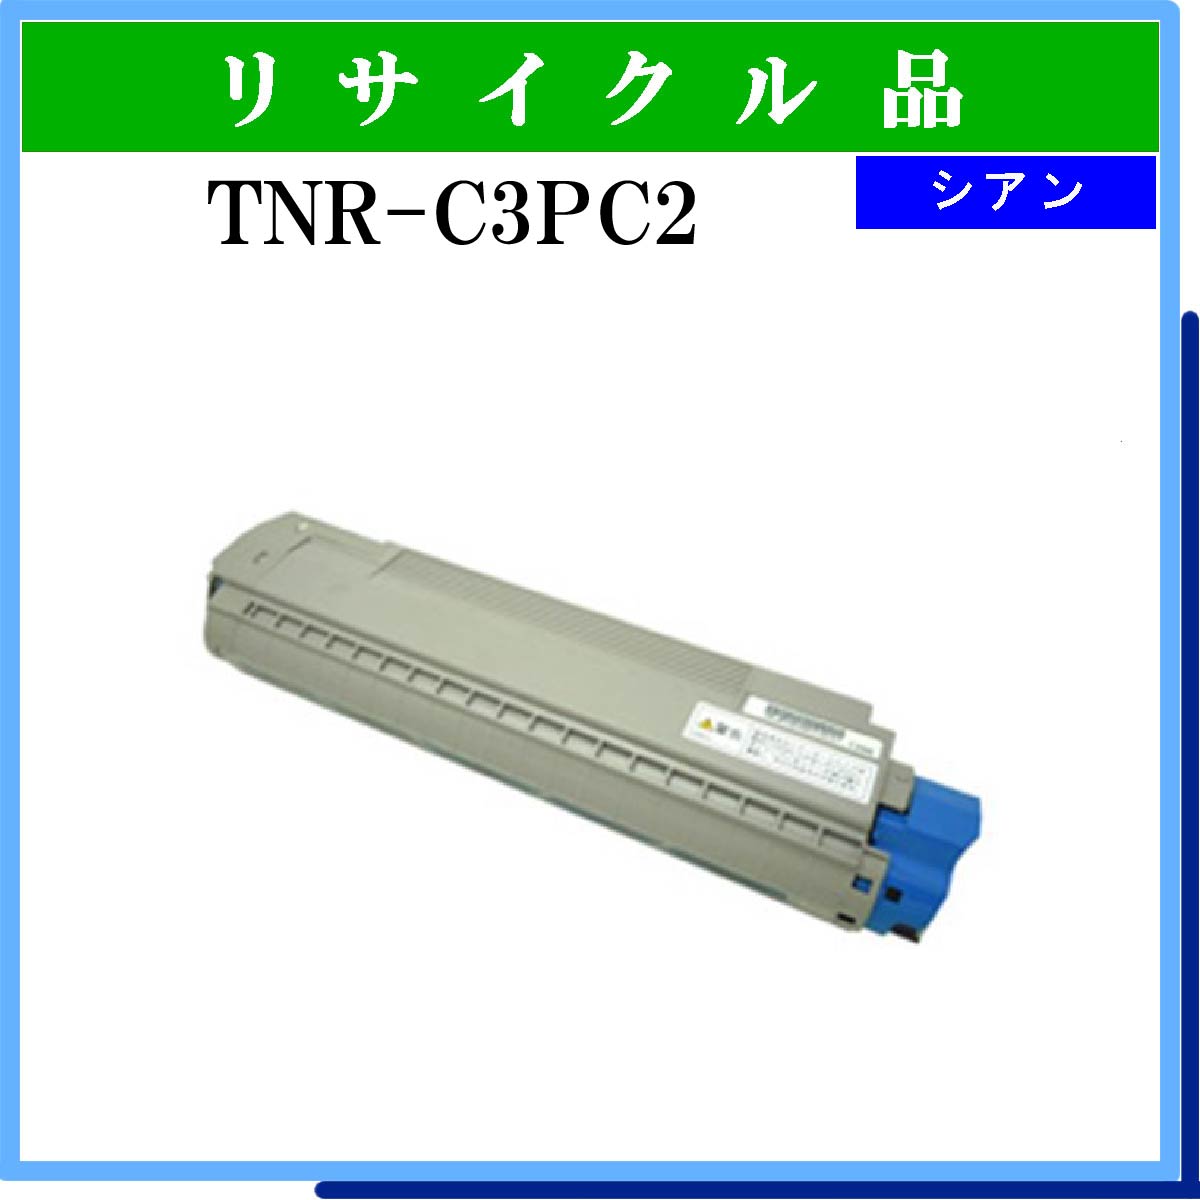 TNR-C3PC2